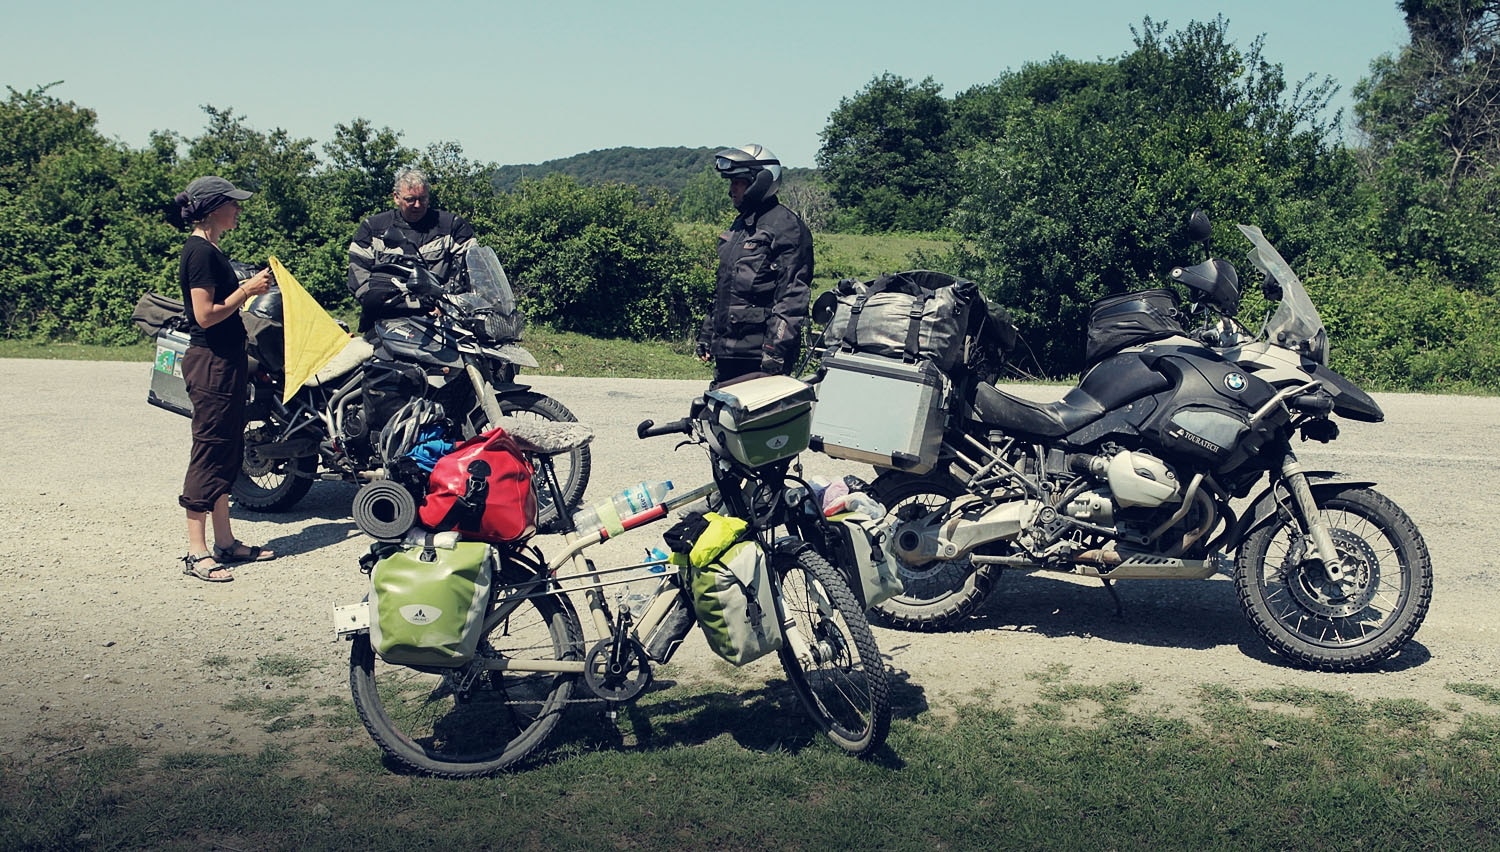 We are traveling: Rucksack vs. Fahrrad